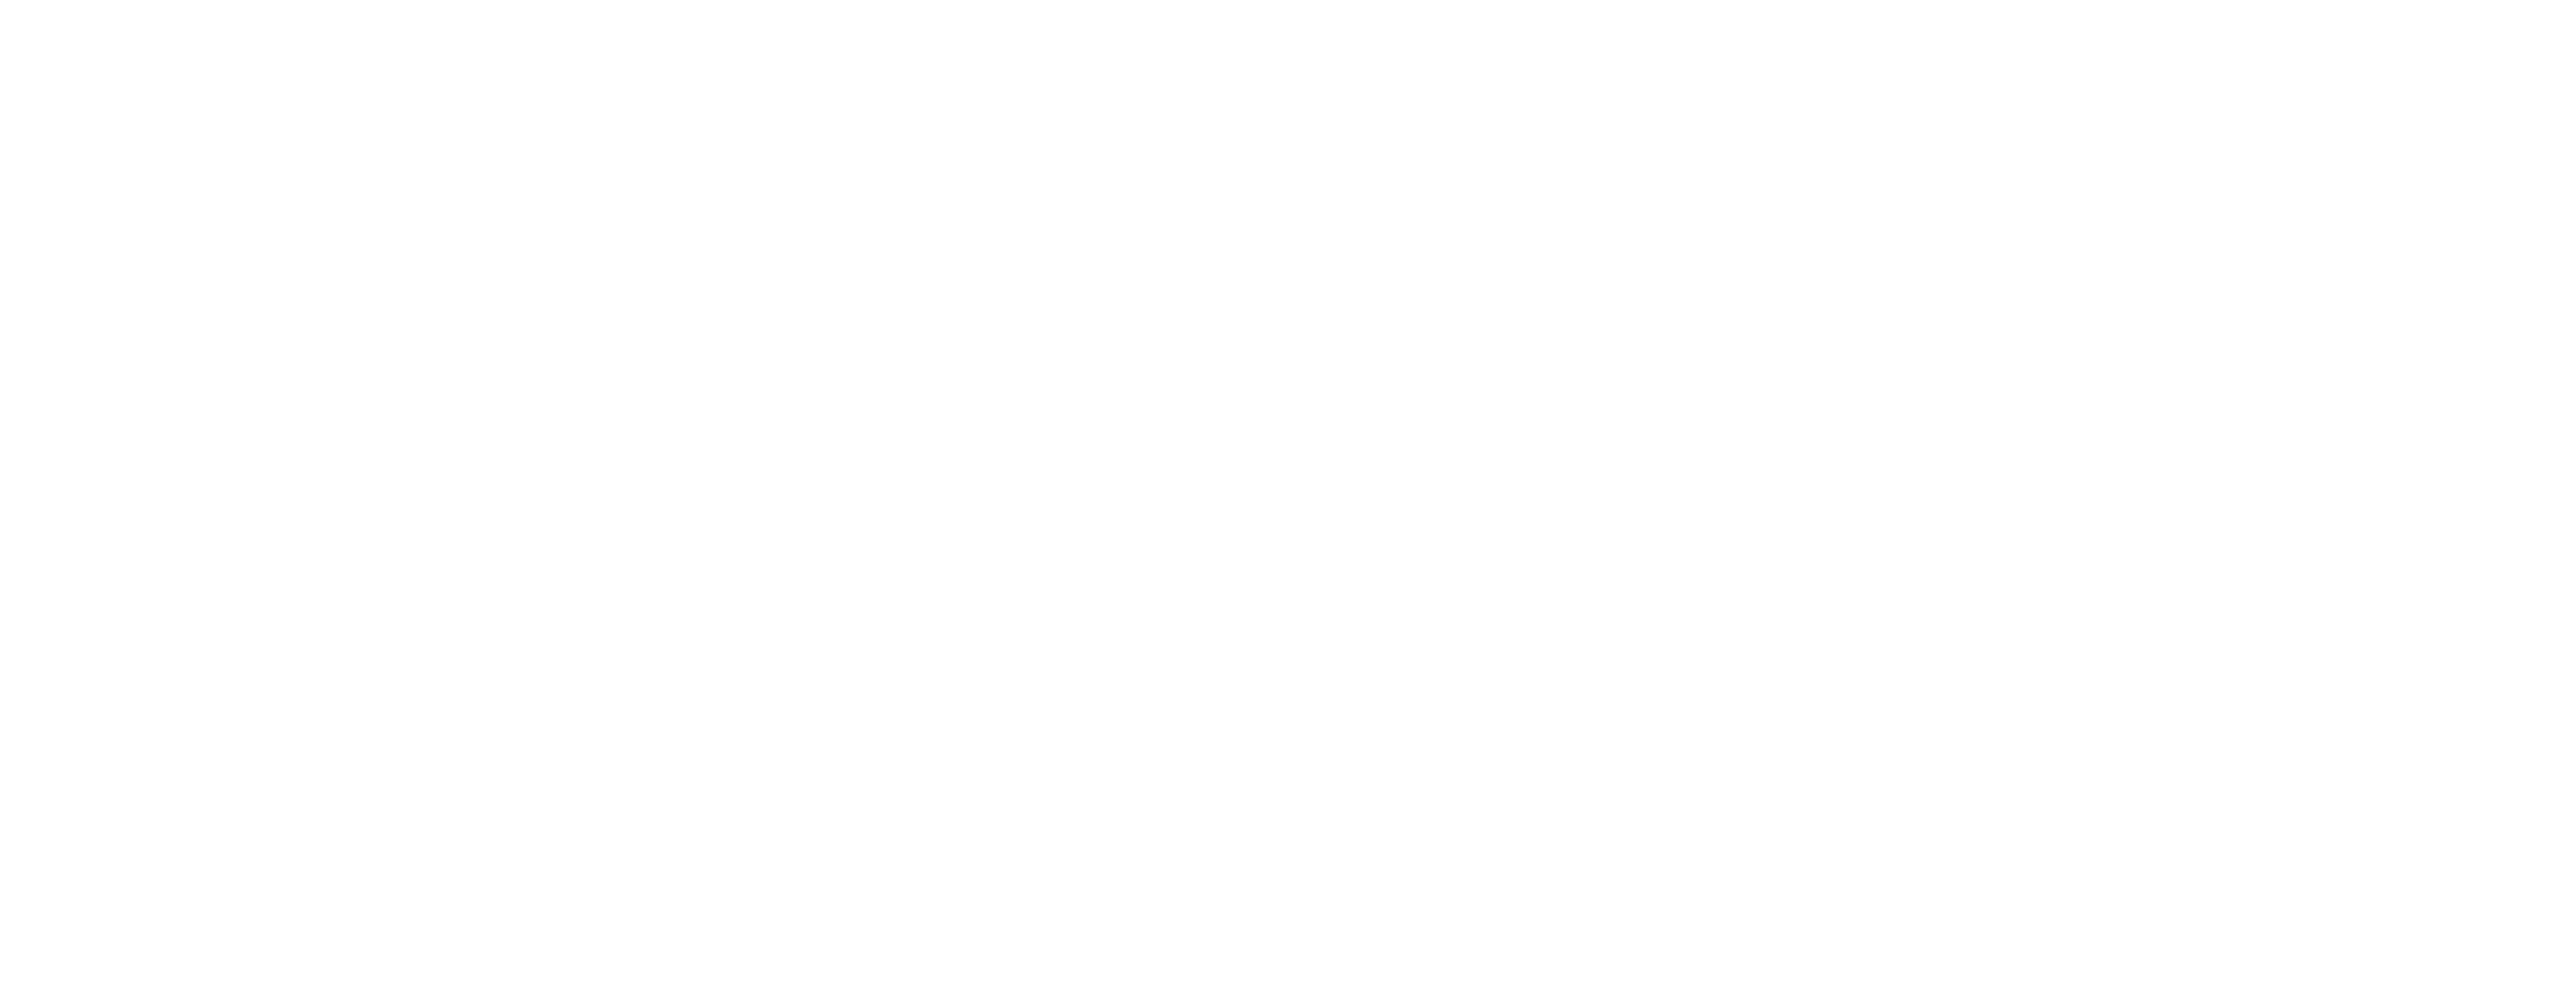 Reitanlage Carolinenhof Sylt